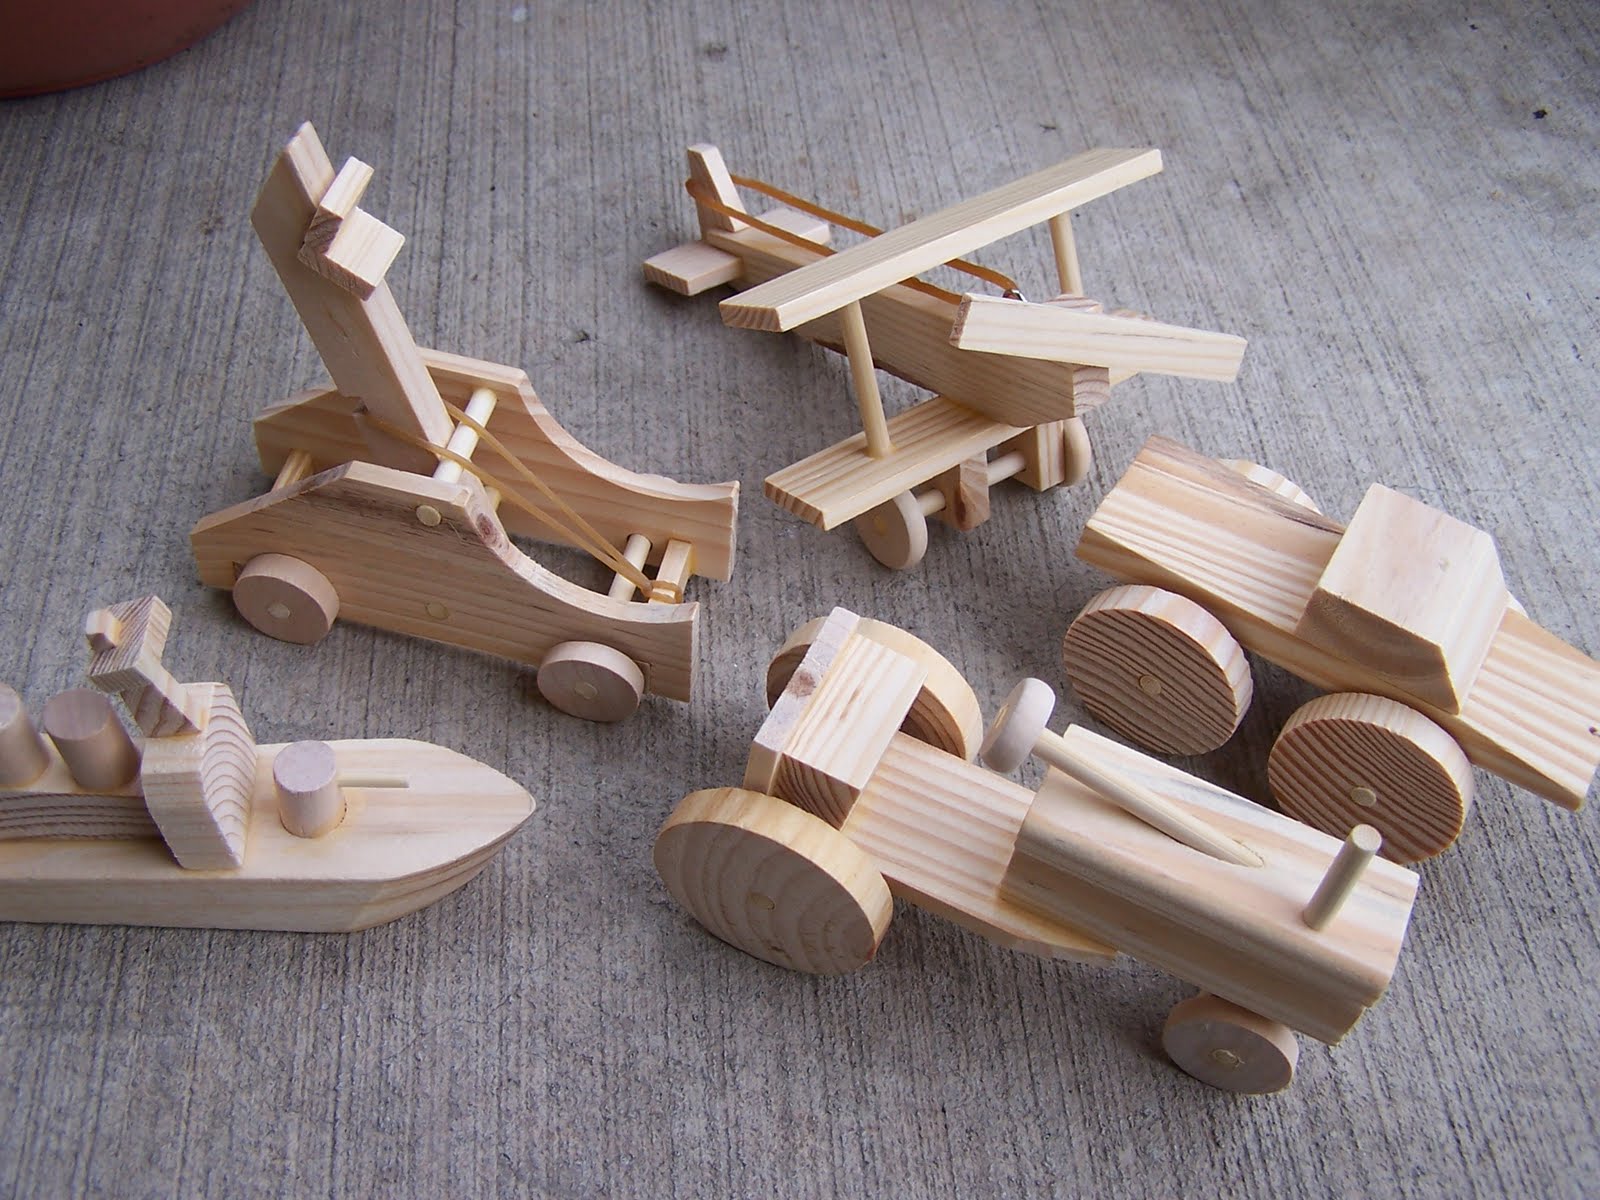 How to Carve Wood Toys | eHow.com